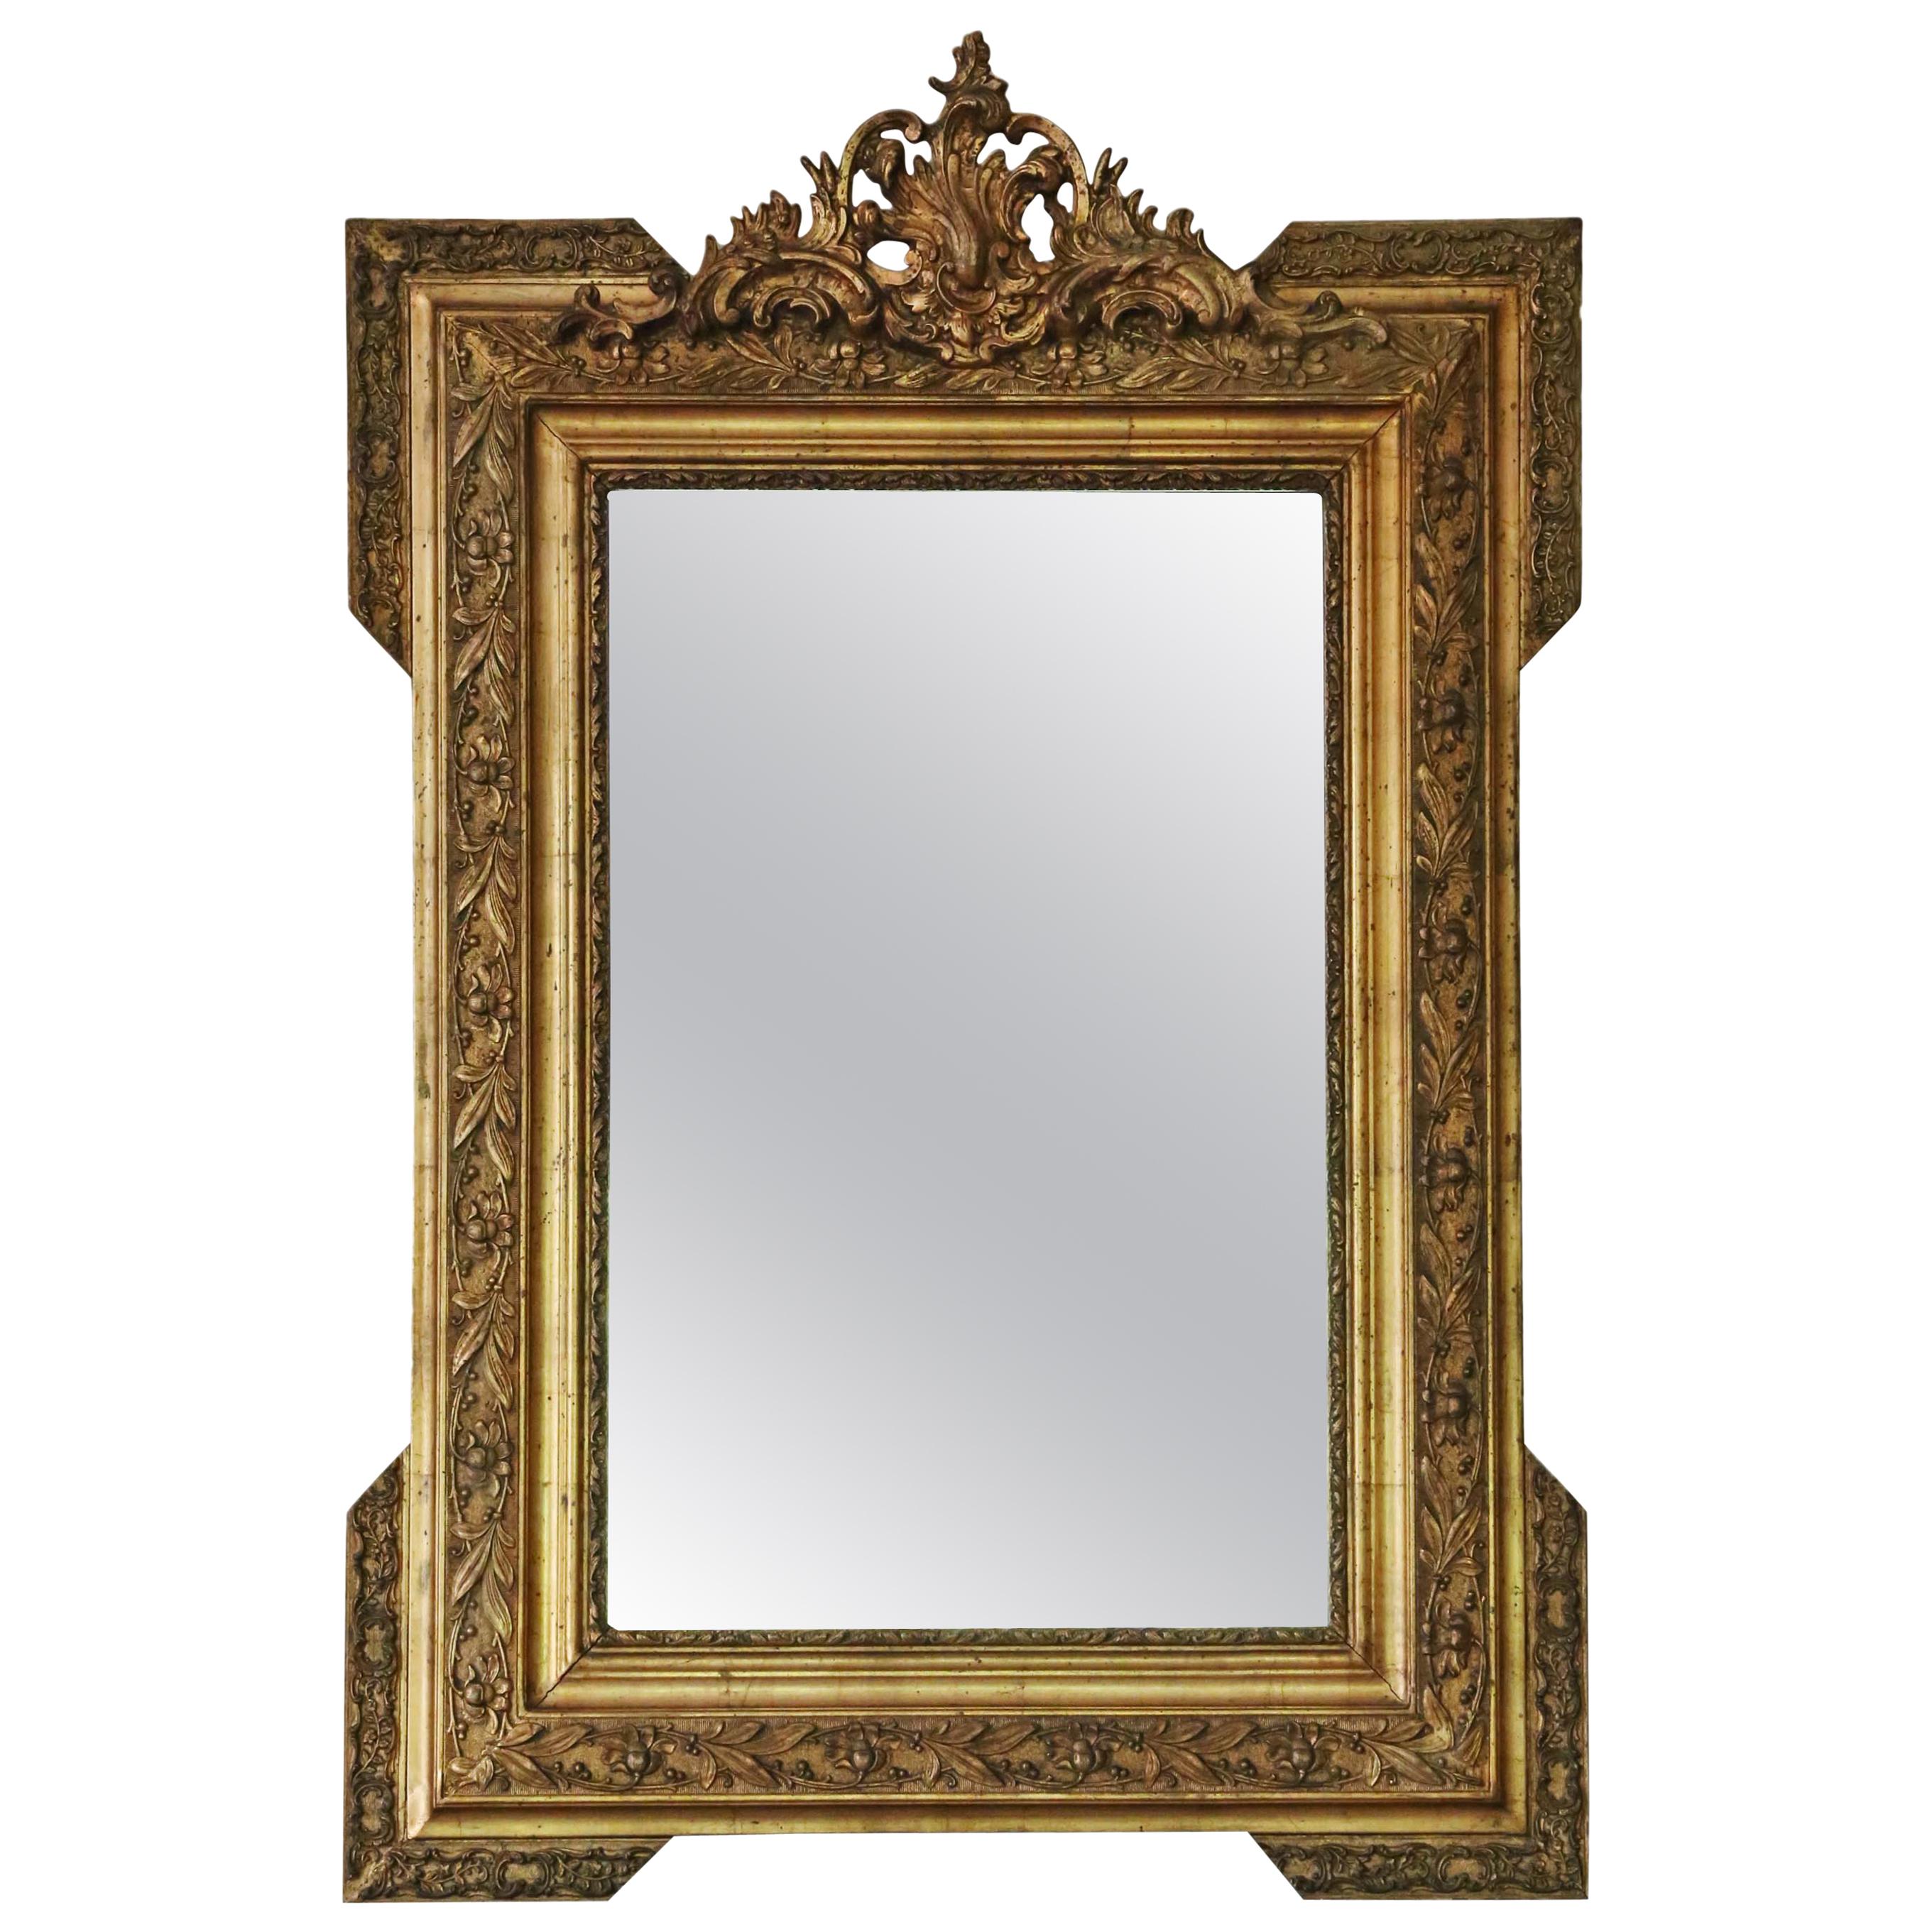 Antique Rare Fine Quality Gilt Overmantle or Wall Mirror, circa 1900